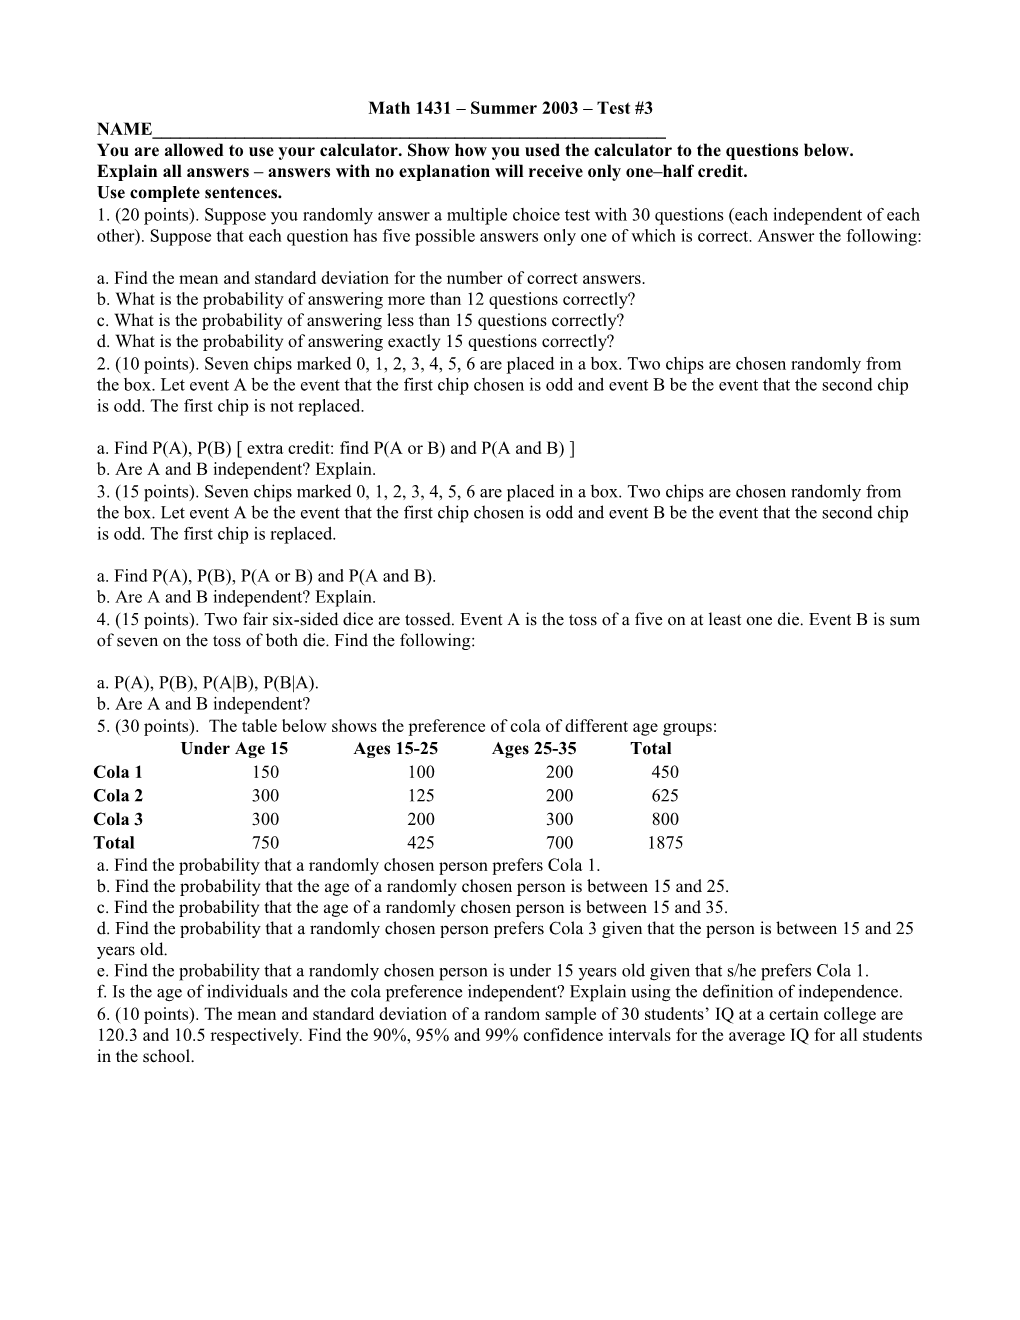 Math 1431 Spring 2003 Test #3 Practice